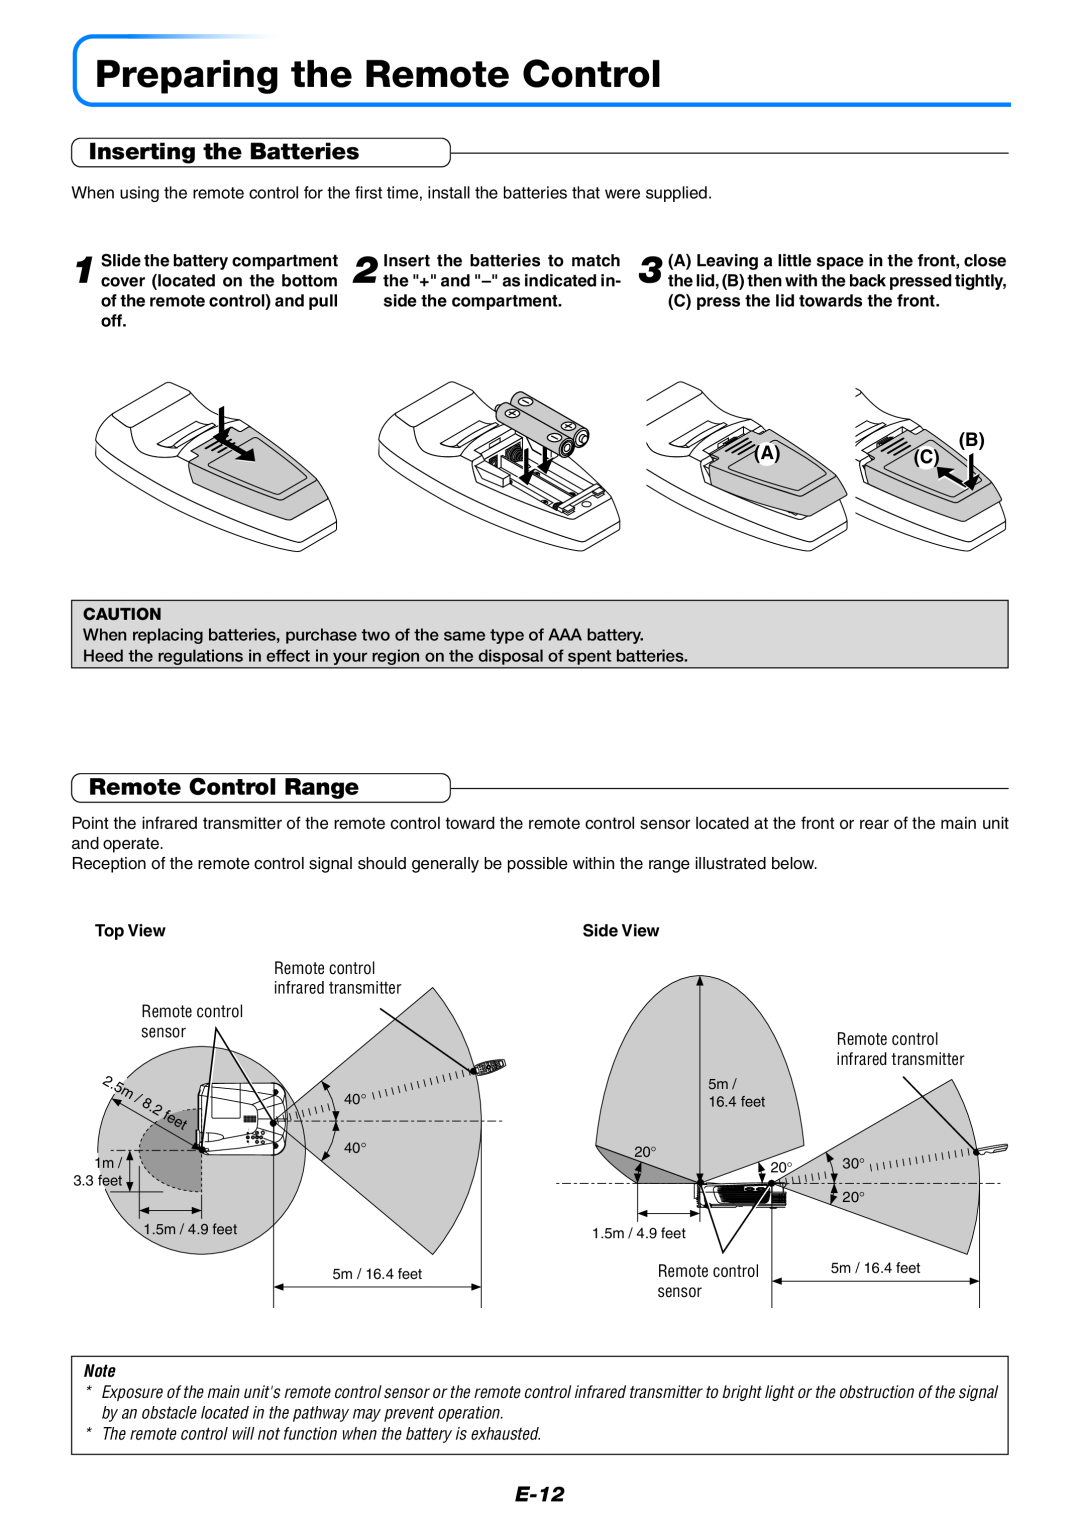 PLUS Vision U7-137, U7-132h user manual Preparing the Remote Control, Inserting the Batteries, Remote Control Range, E-12 